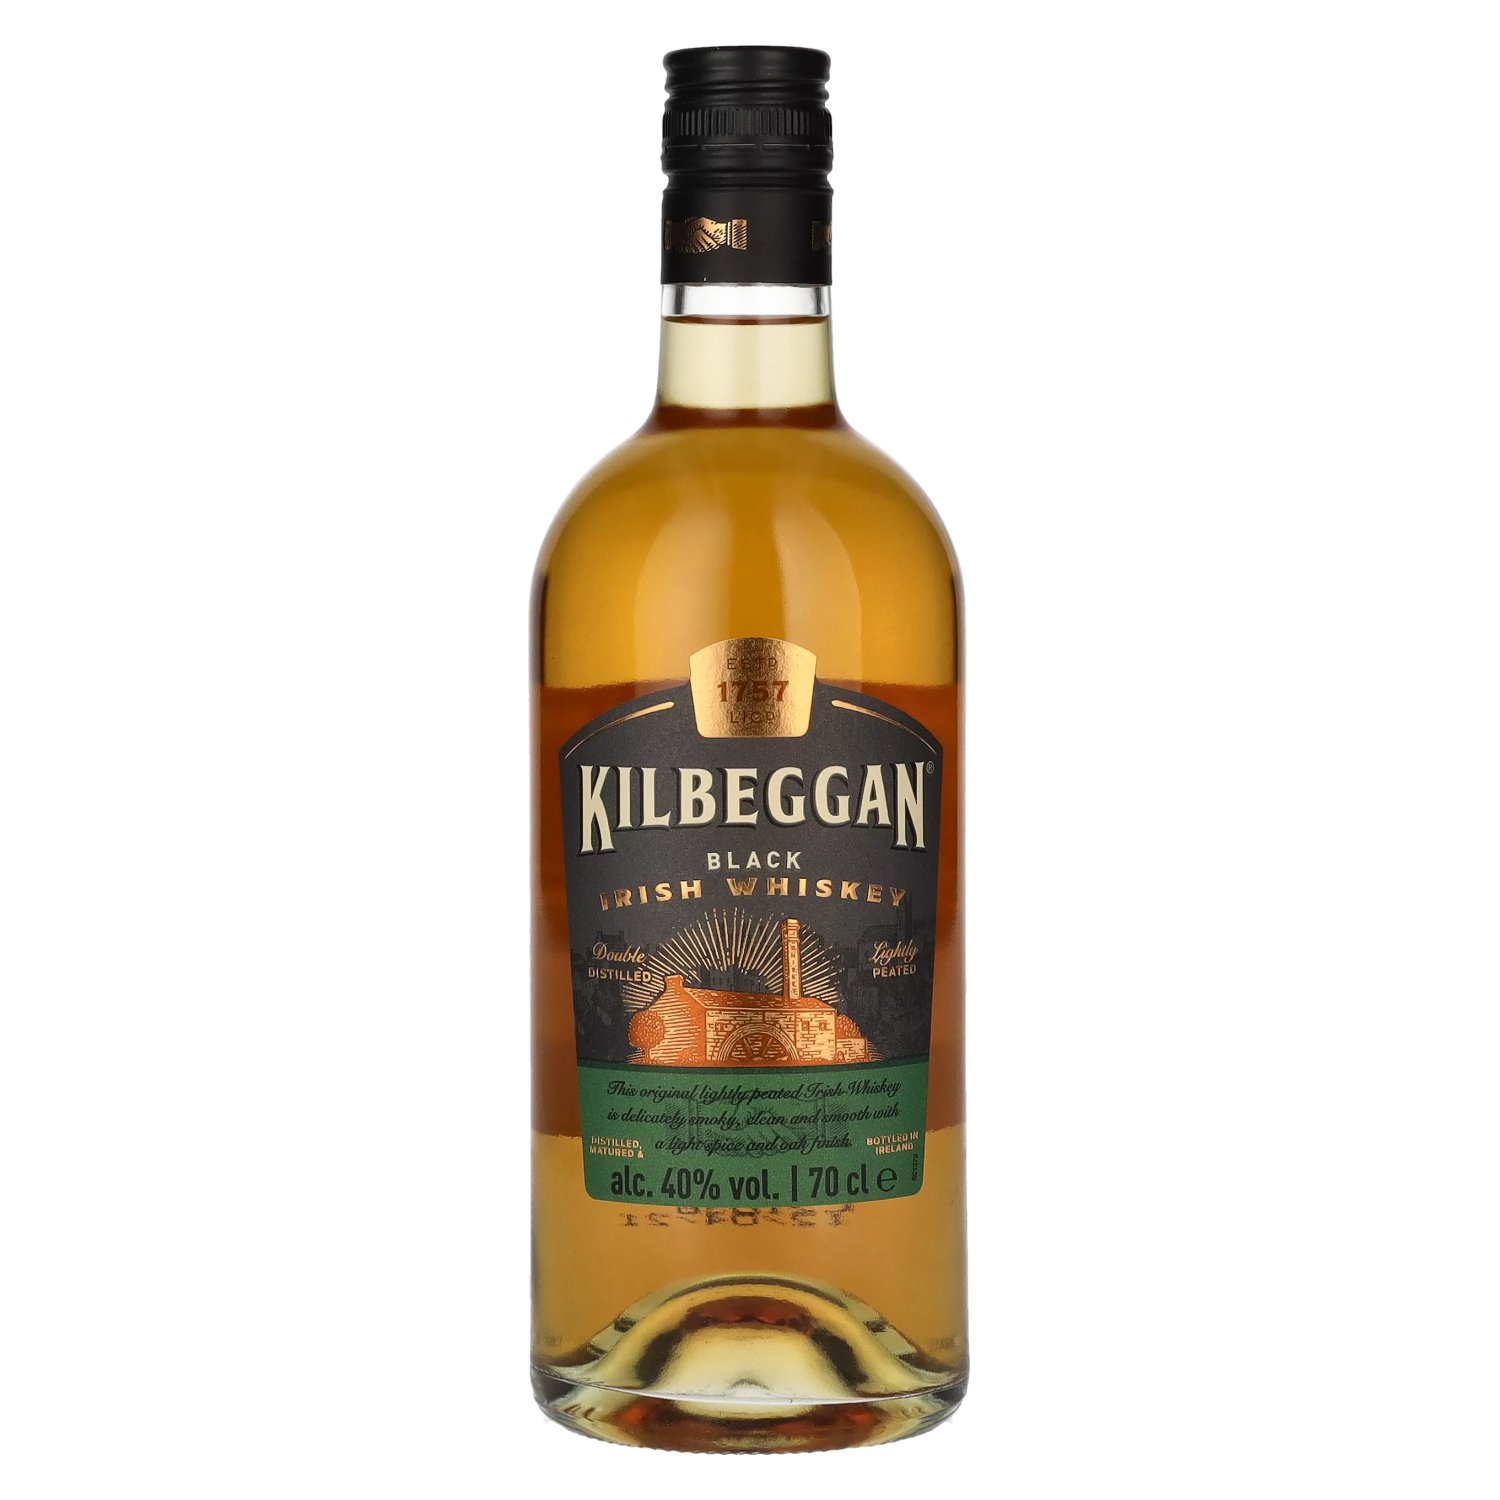 Kilbeggan Black Whiskey 40% delicando 0,7l Vol. - Irish